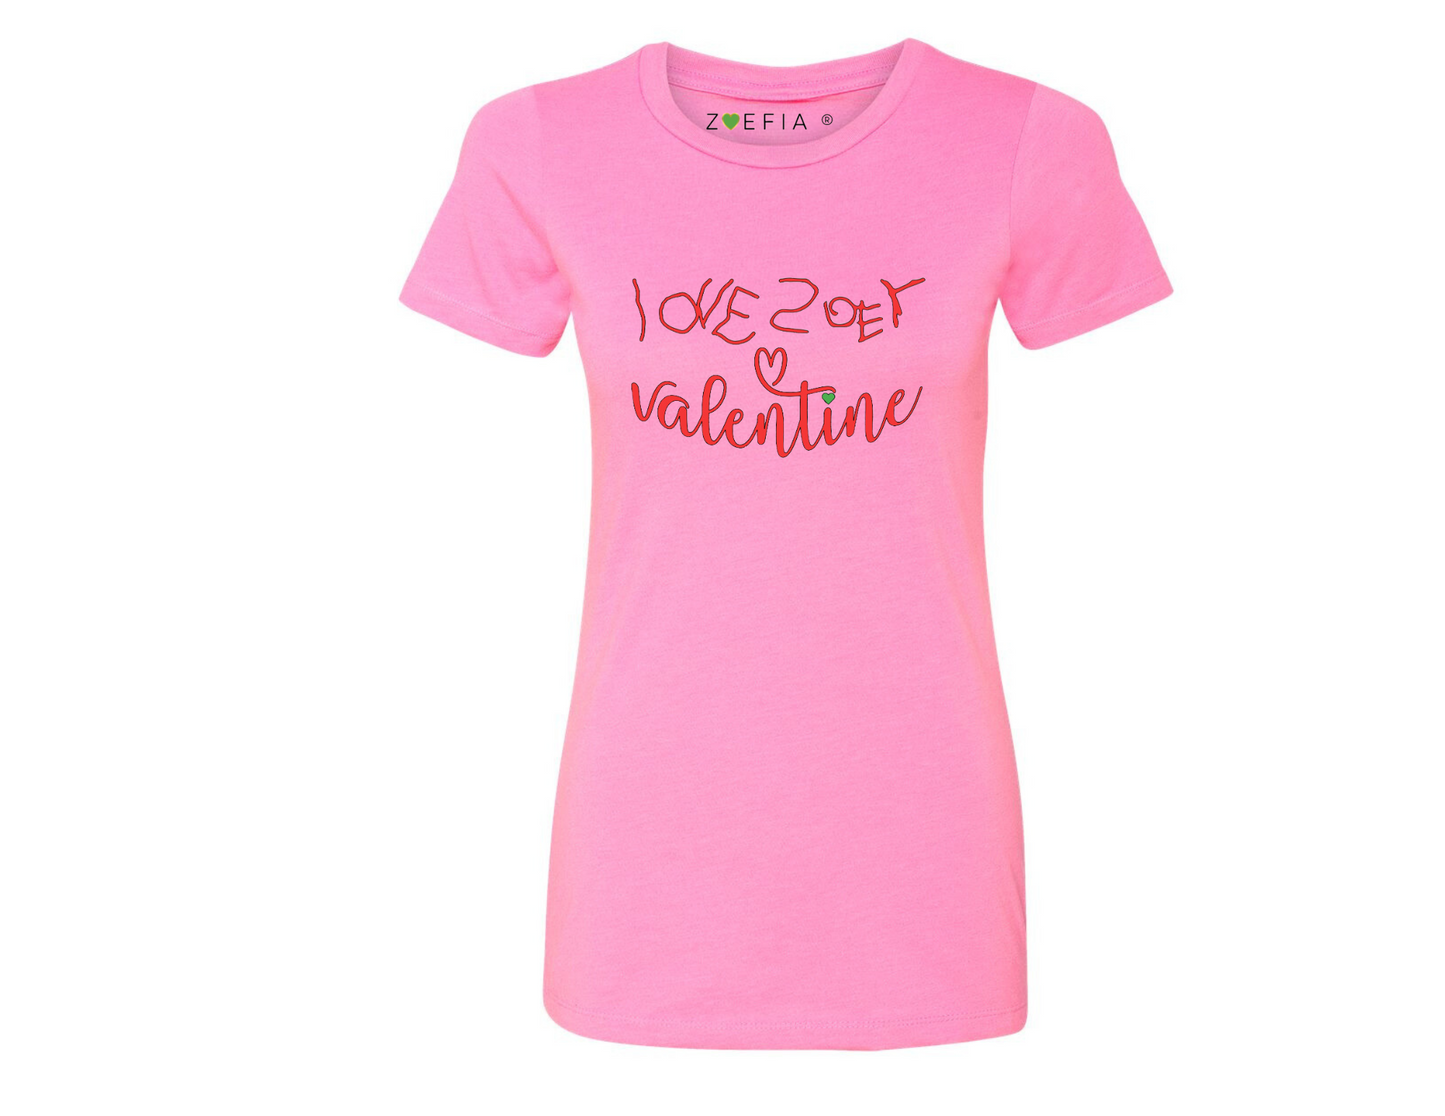 Love Zoey ValentineT-Shirt